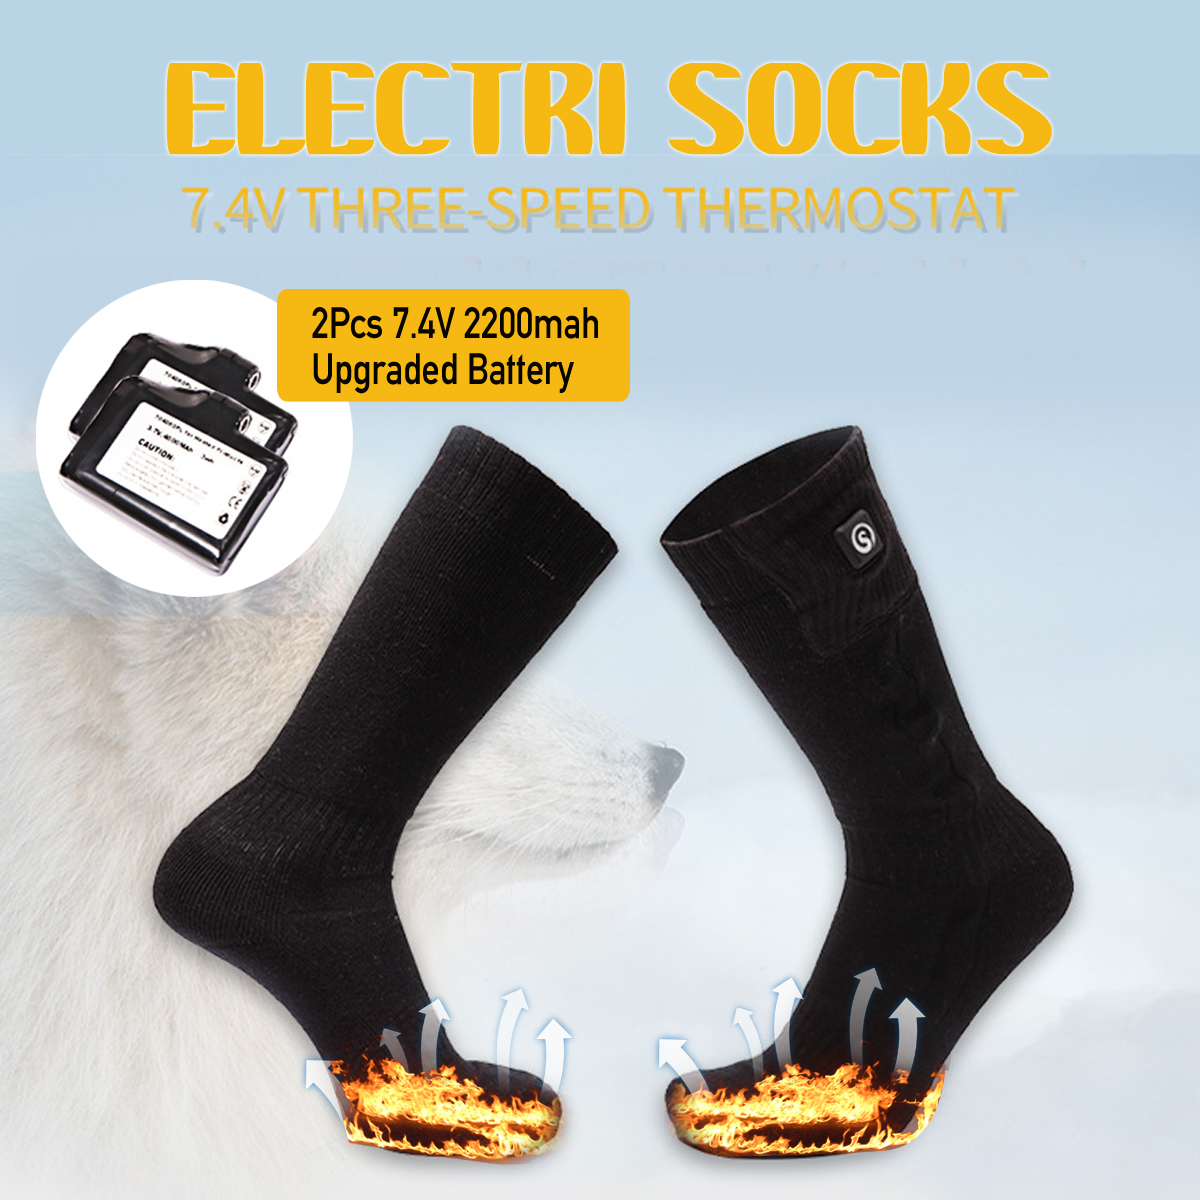 SAVIOR-74V-2200mAh-Electric-Heated-Socks-Rechargeable-Battery-Feet-Warmer-For-Skiing-1425472-2